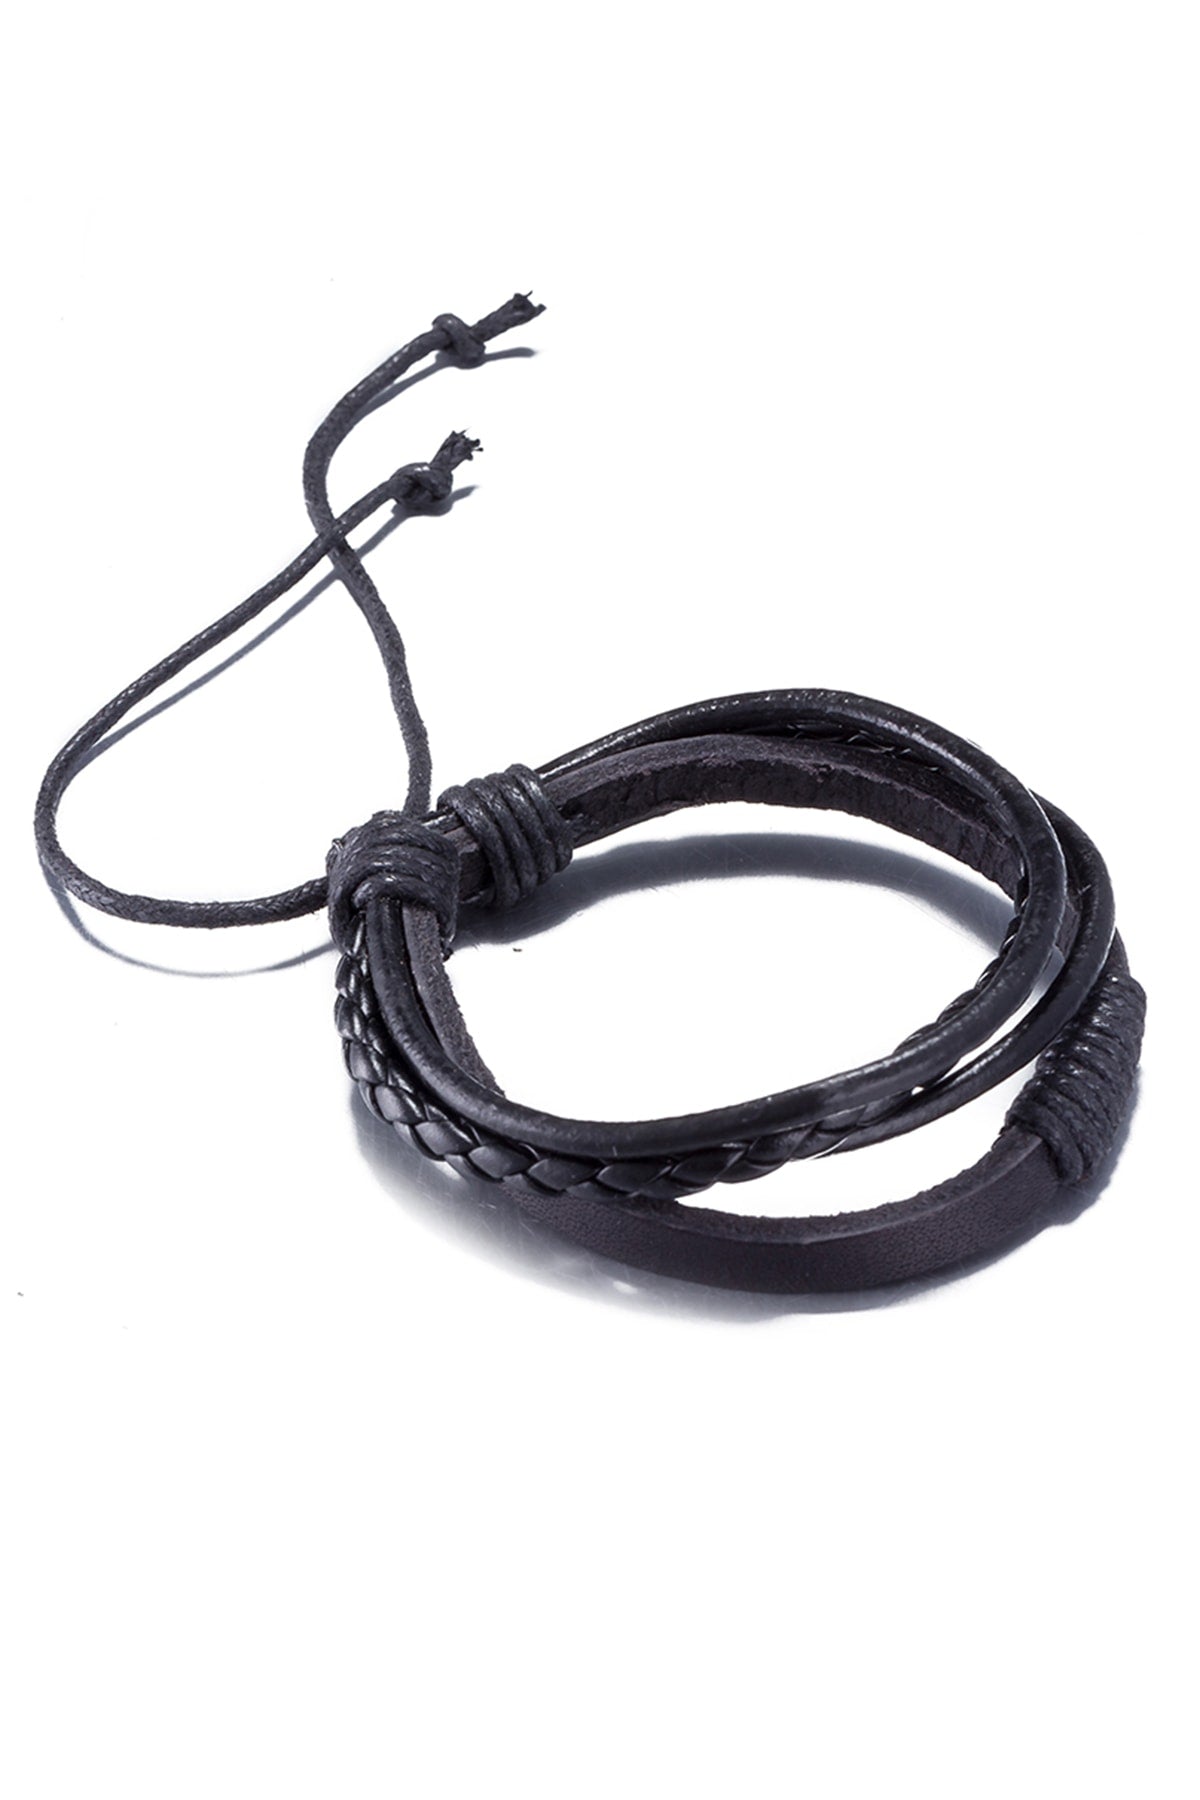 Black Vintage Fashion Strap Leather Rope Wristband Bracelet